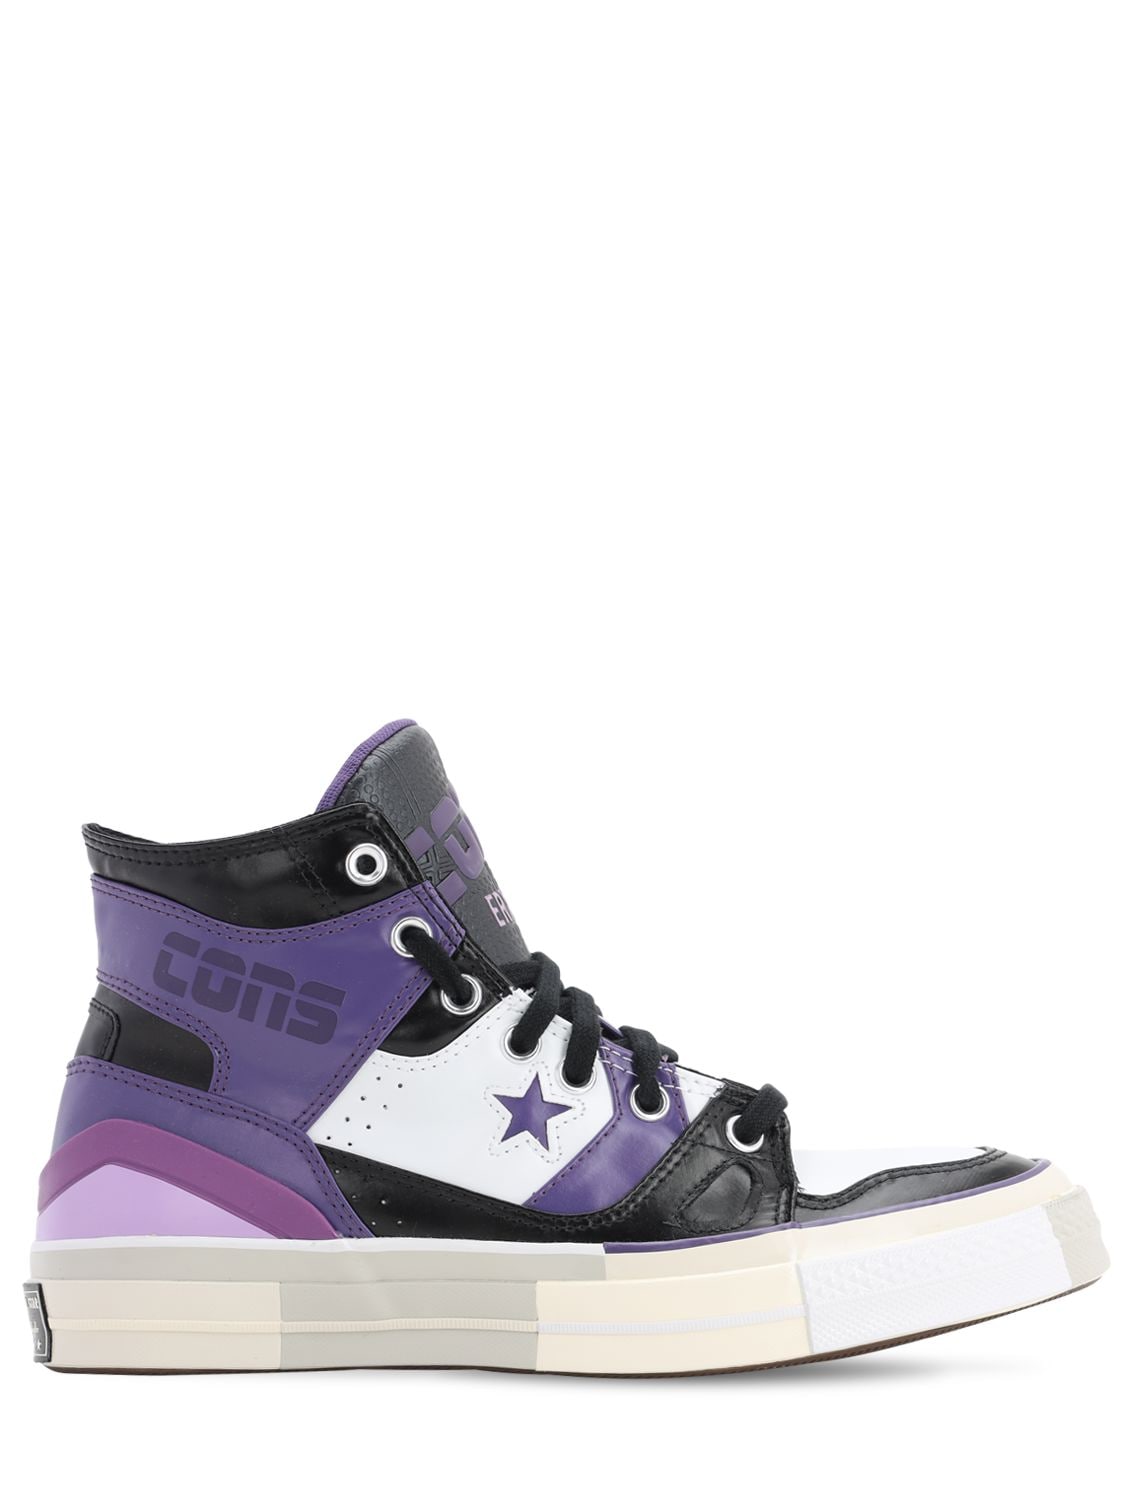 converse black purple